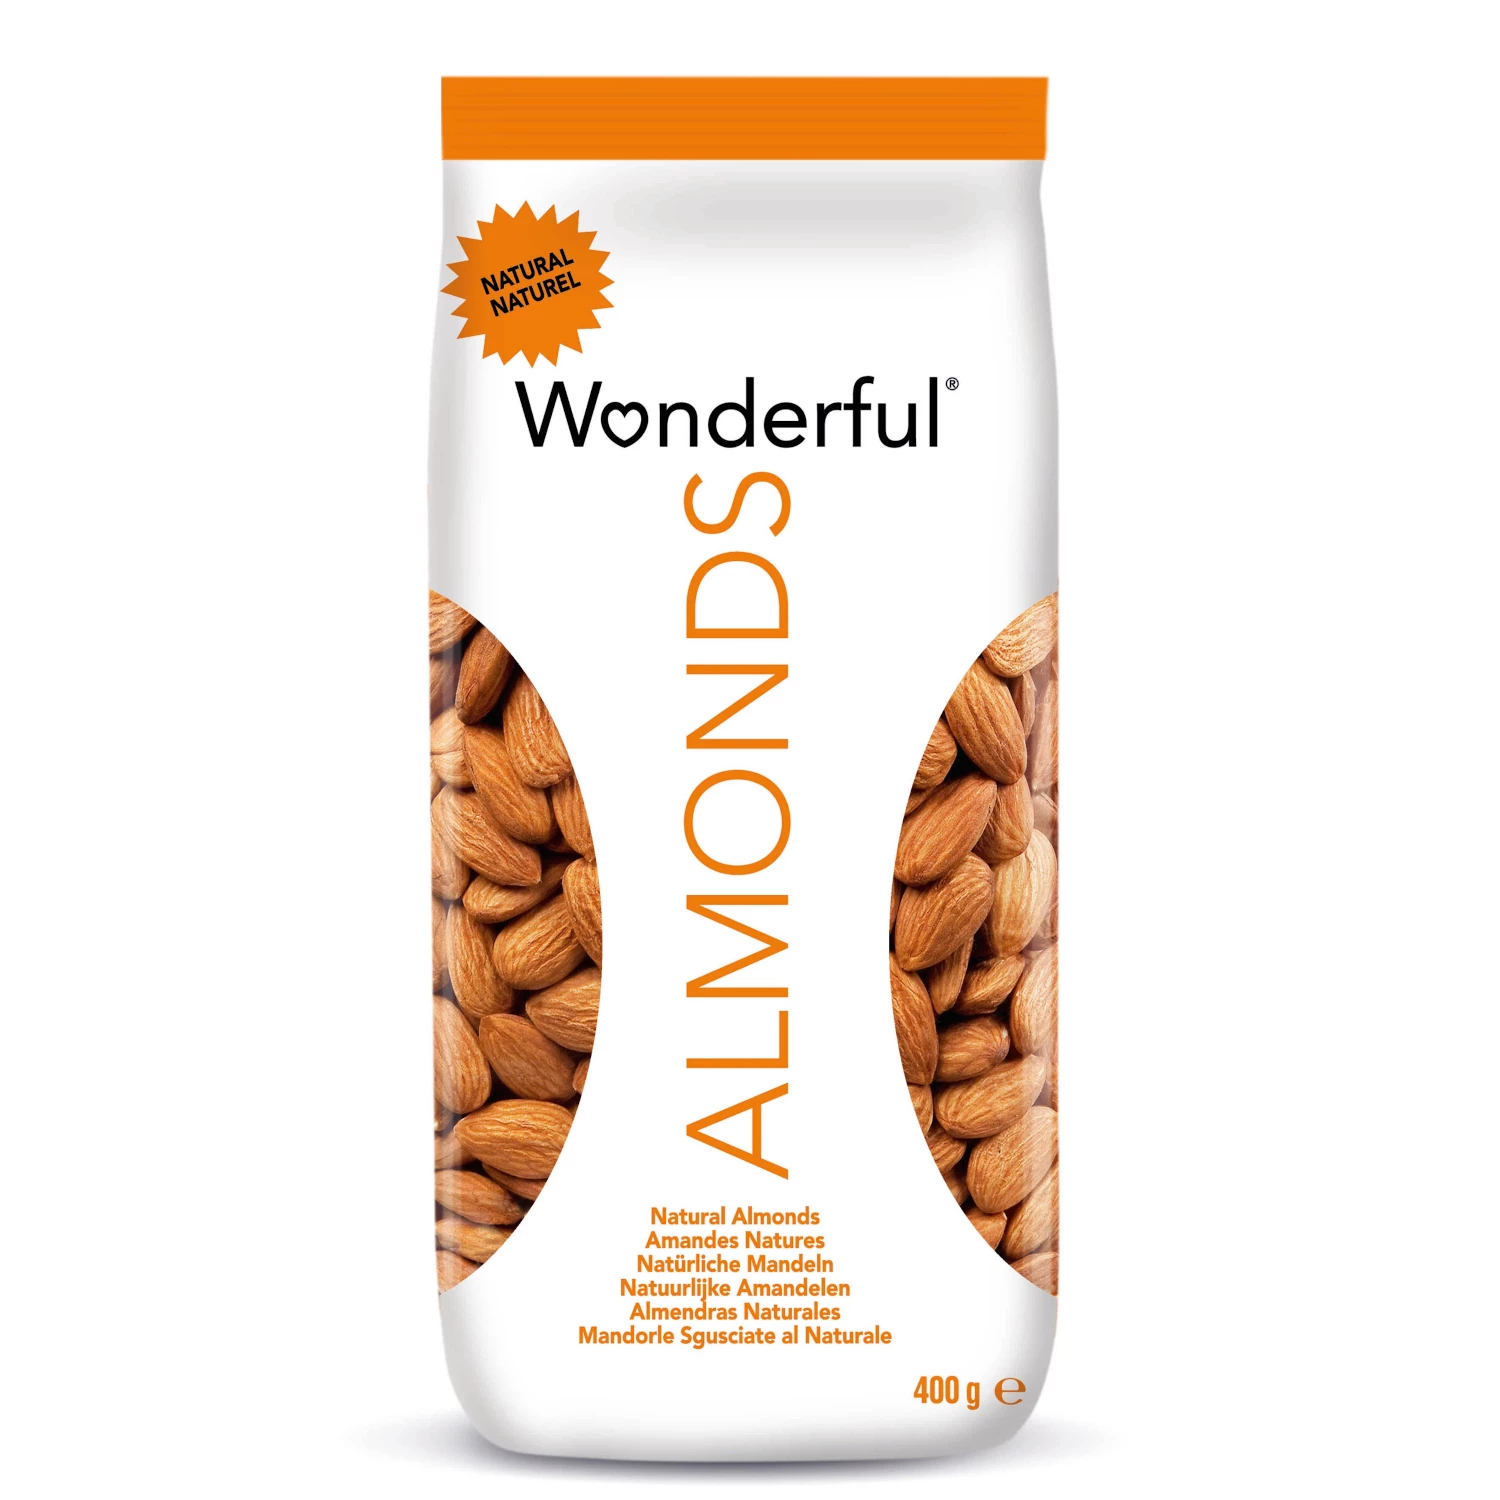 Natural Almonds, 400g - WONDERFUL